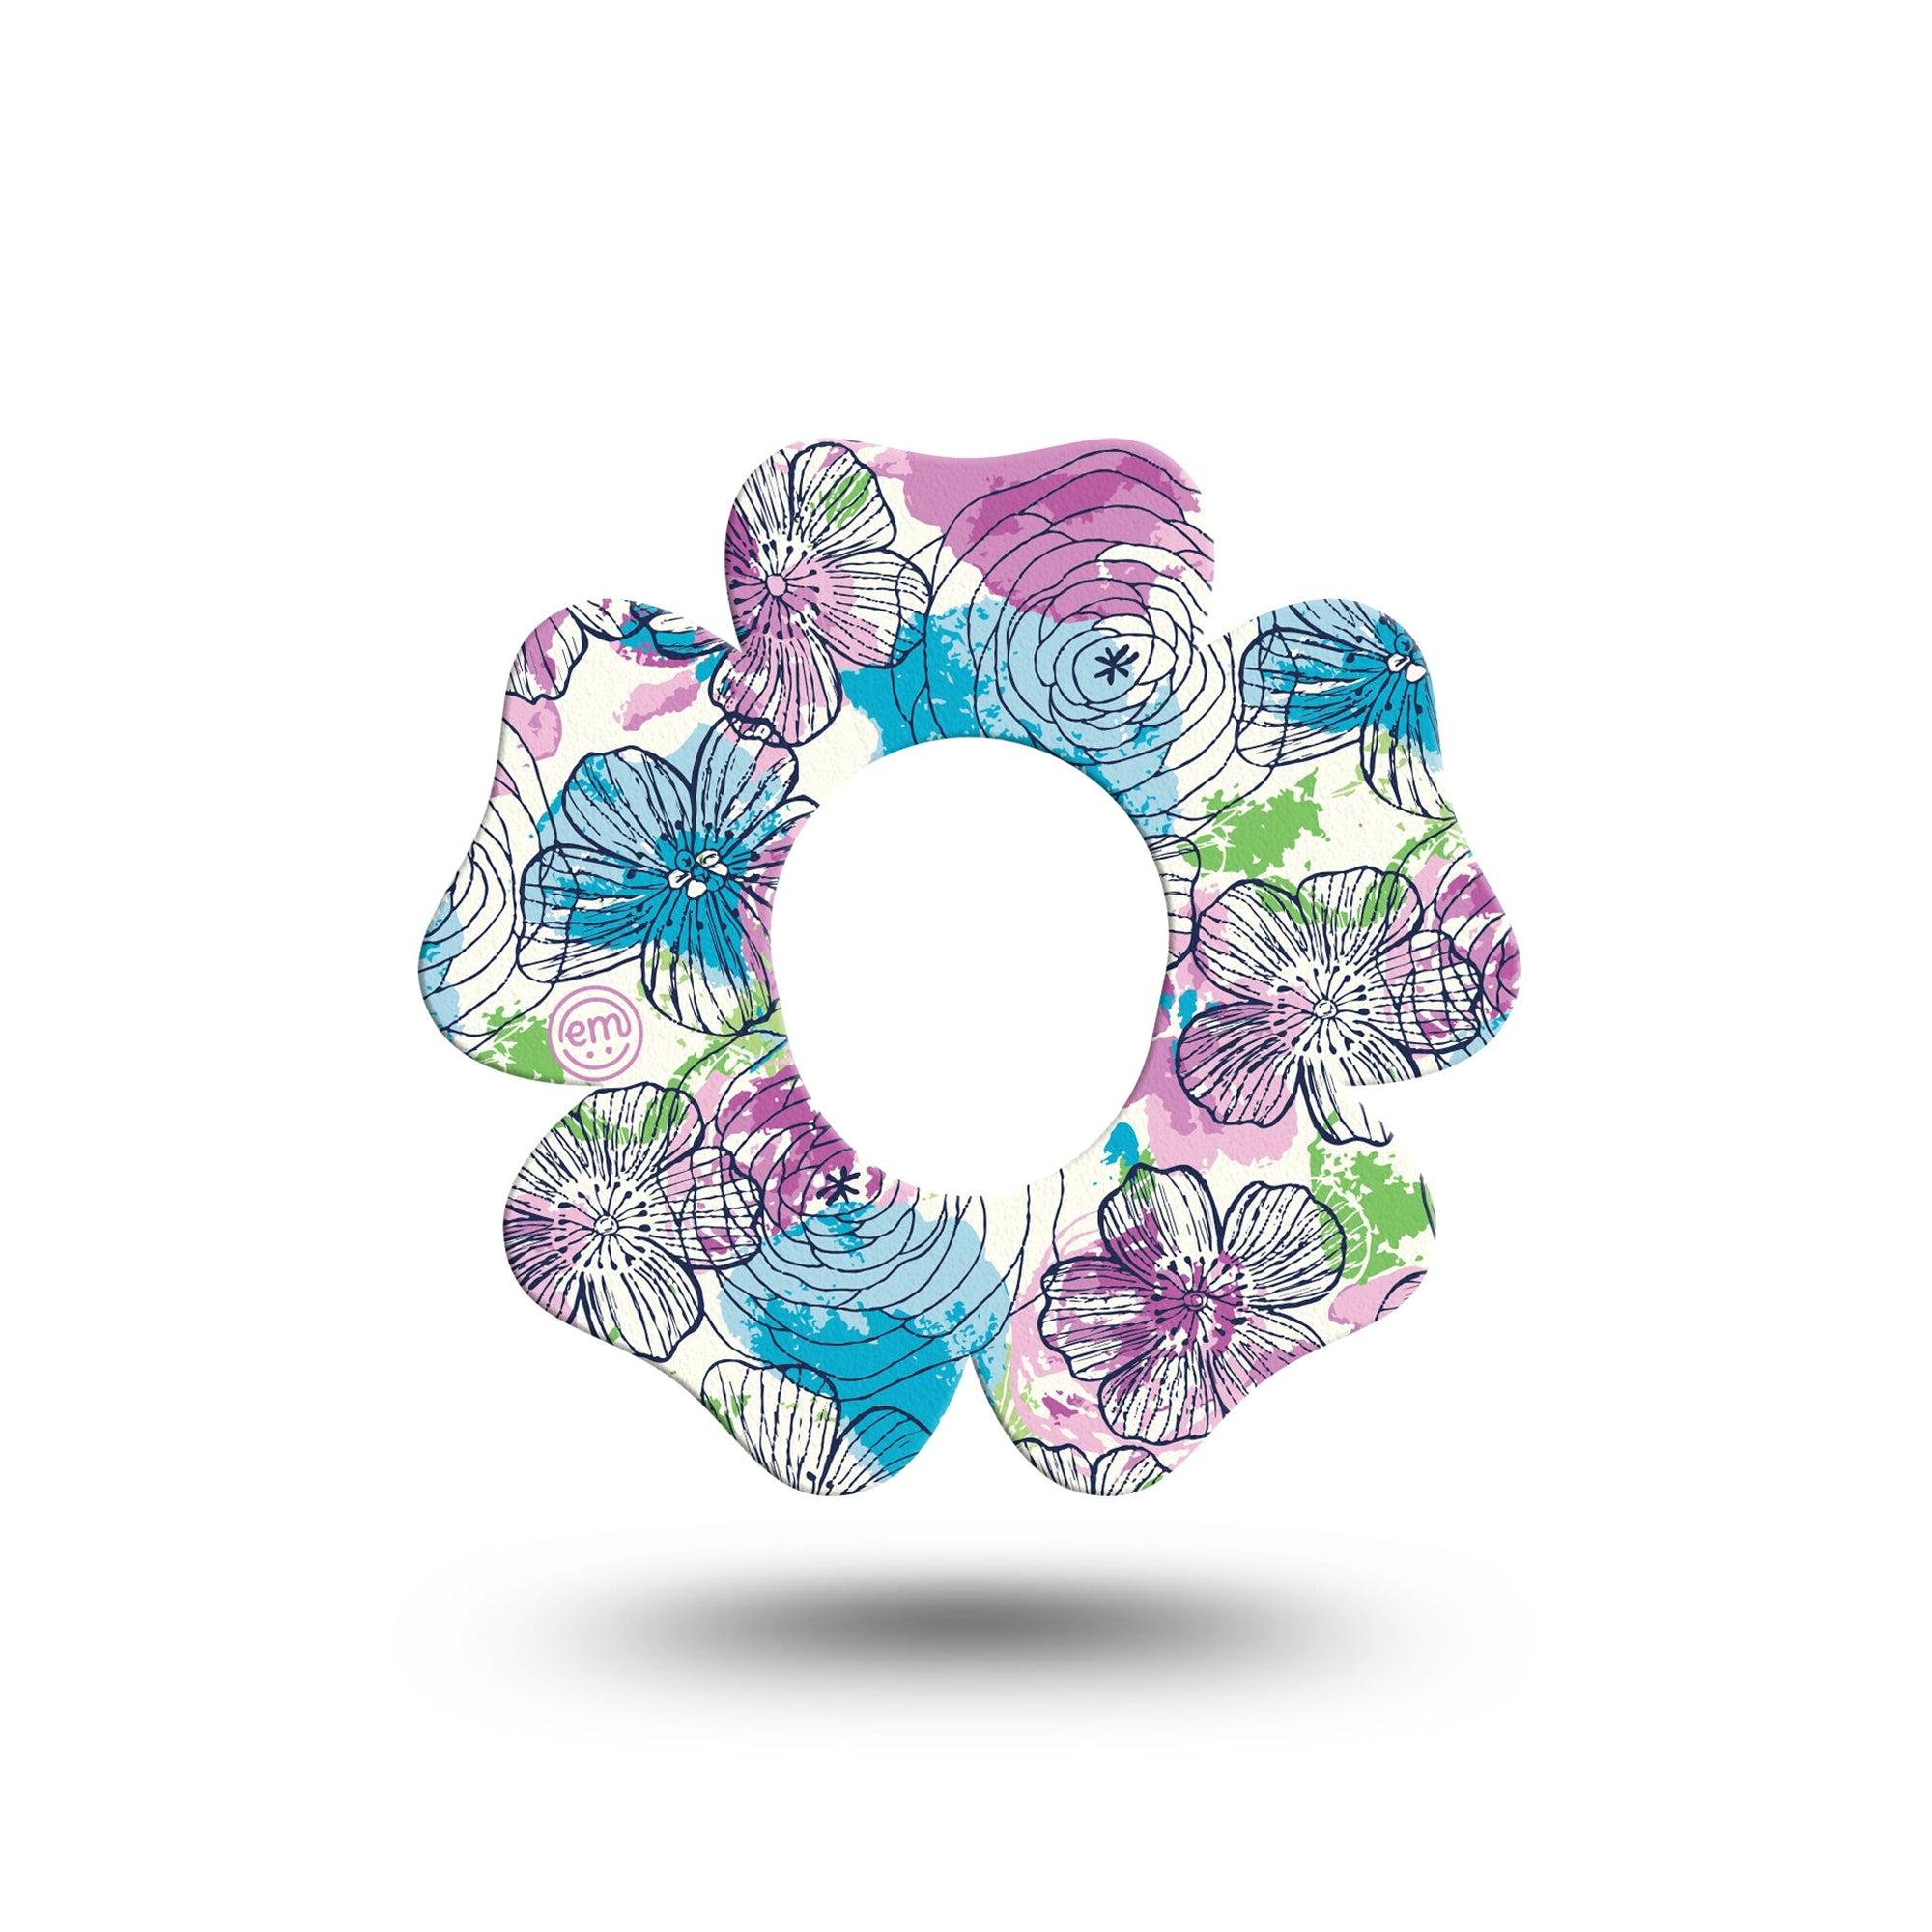 ExpressionMed Stenciled Flowers Flower Dexcom G7 Tape, Single, Line Art Flowers Themed, Plaster Patch Design